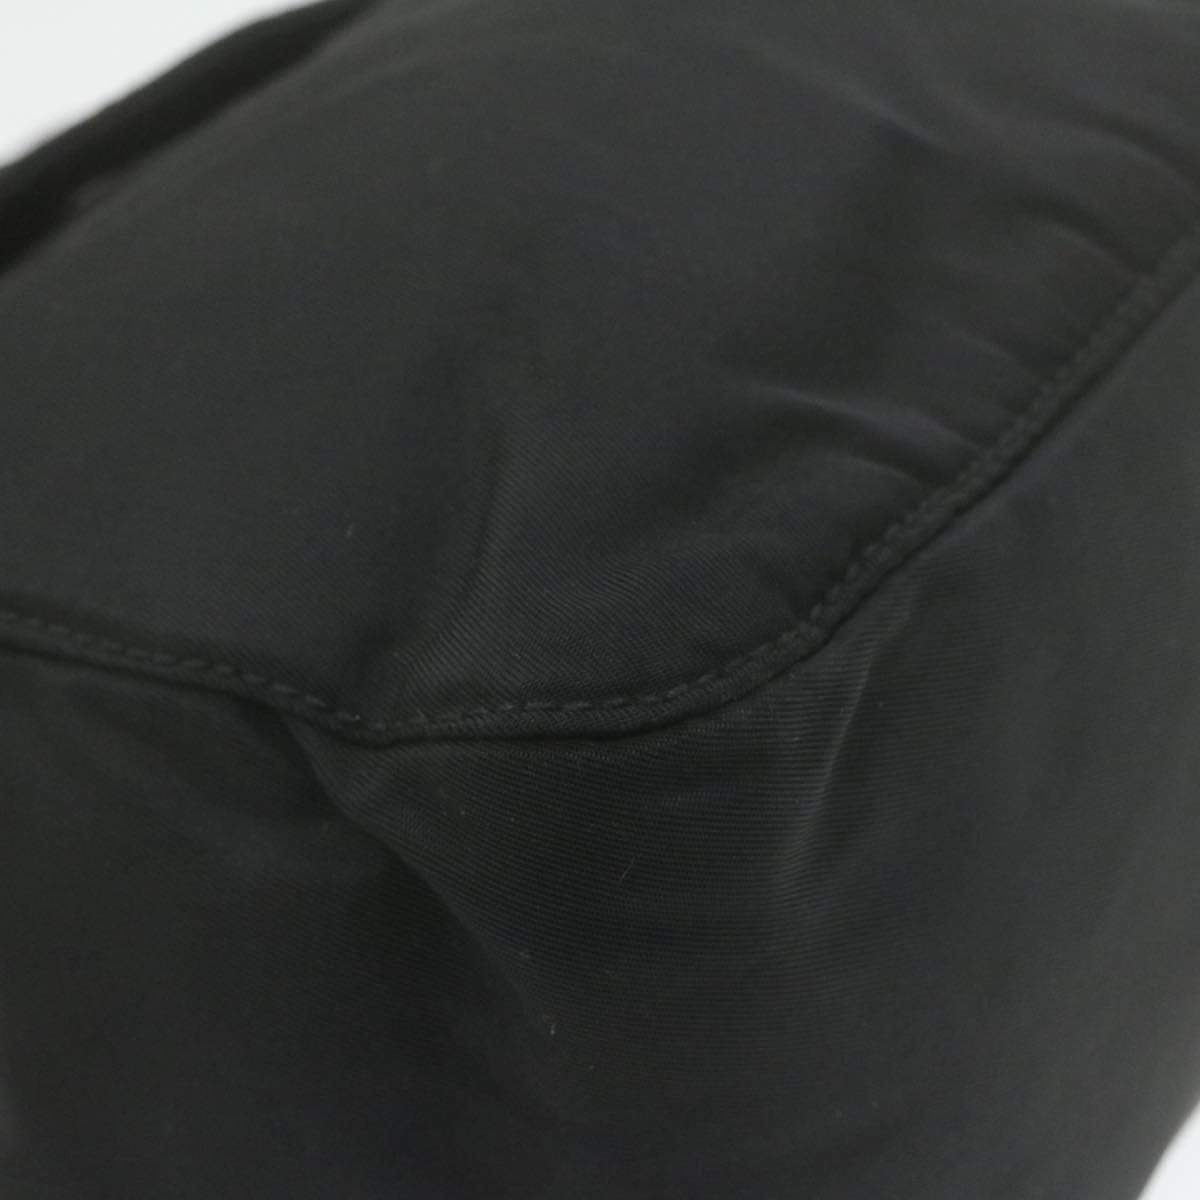 Prada PRADA Nylon Small Backpack Black MW2323